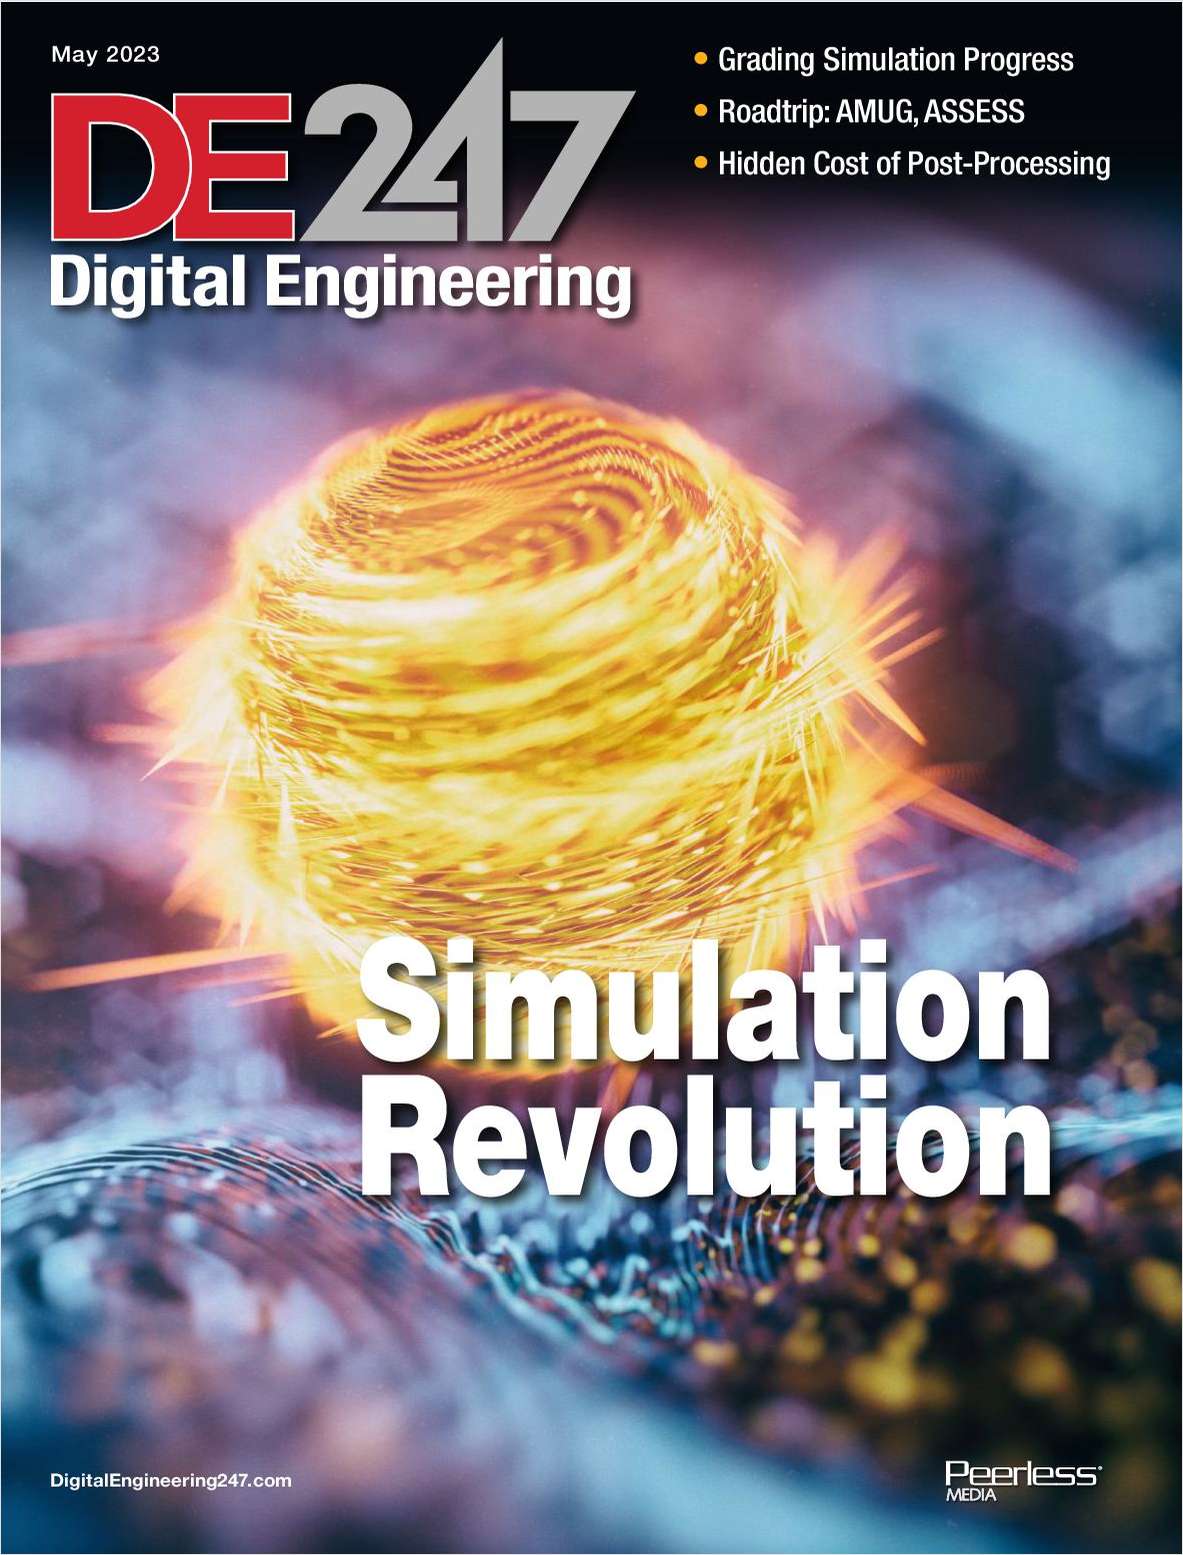 Digital Engineering: Simulation Revolution